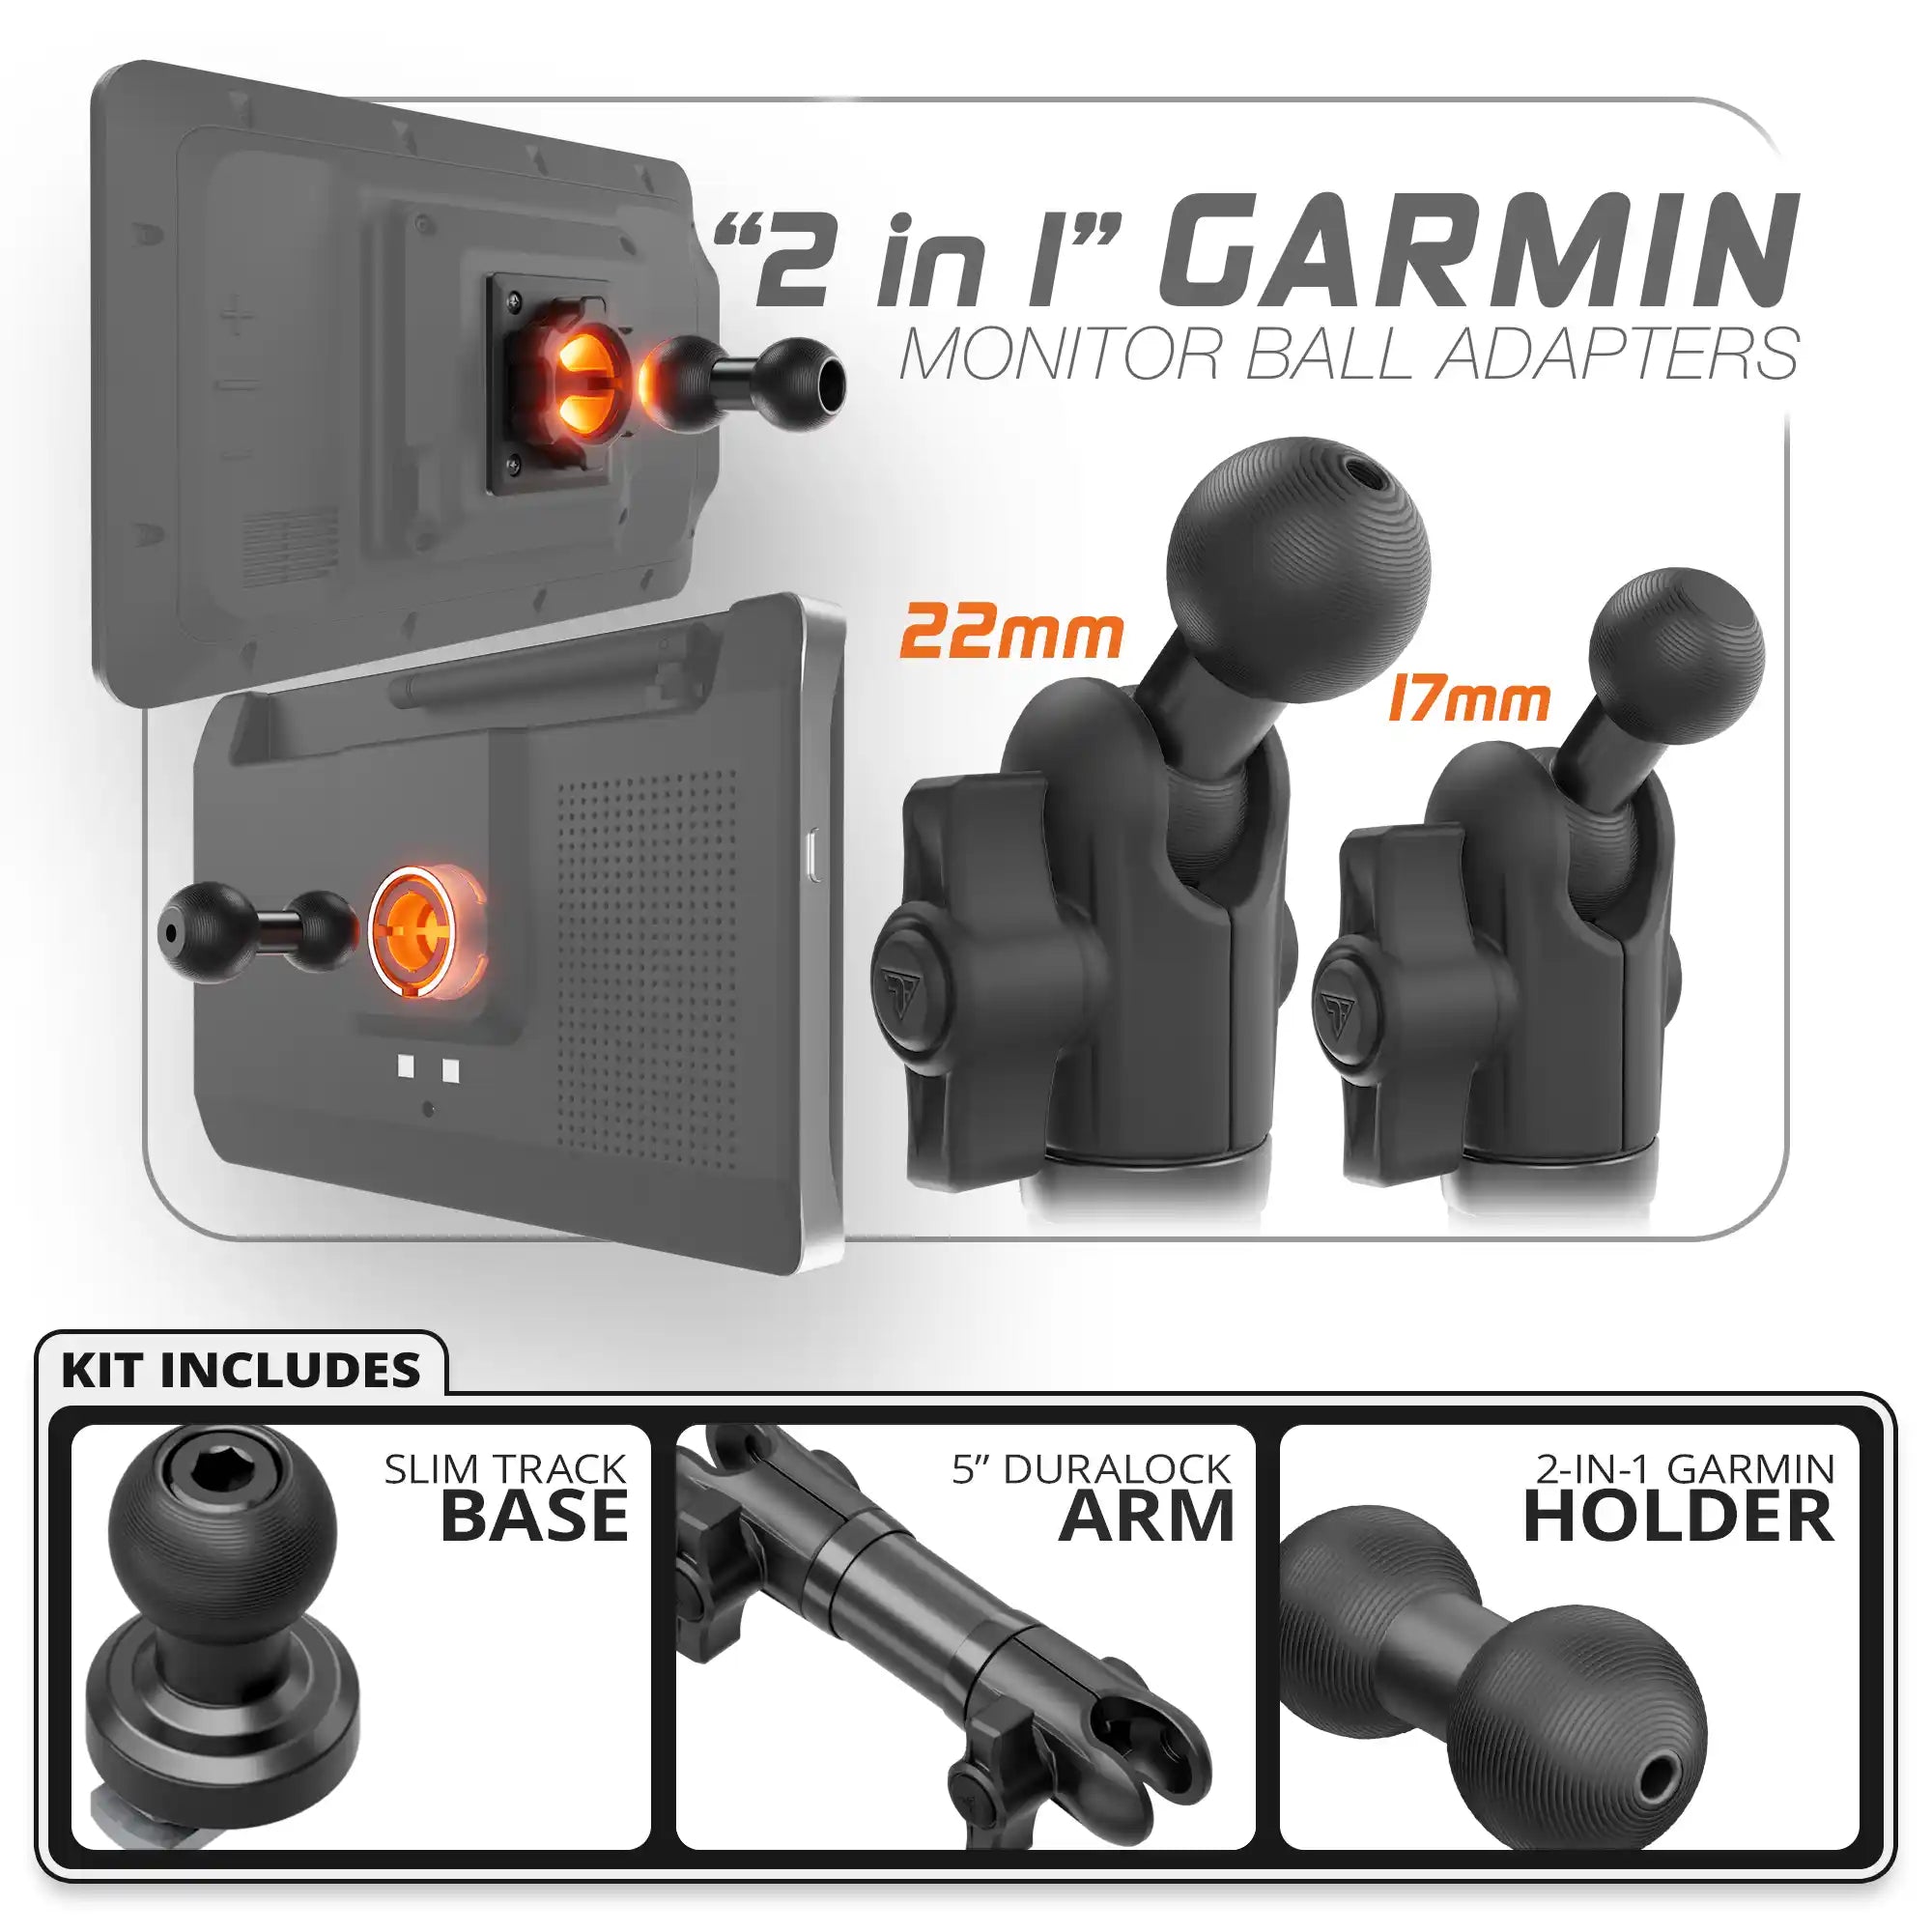 Garmin | Slim Track Base | 5" DuraLock Arm